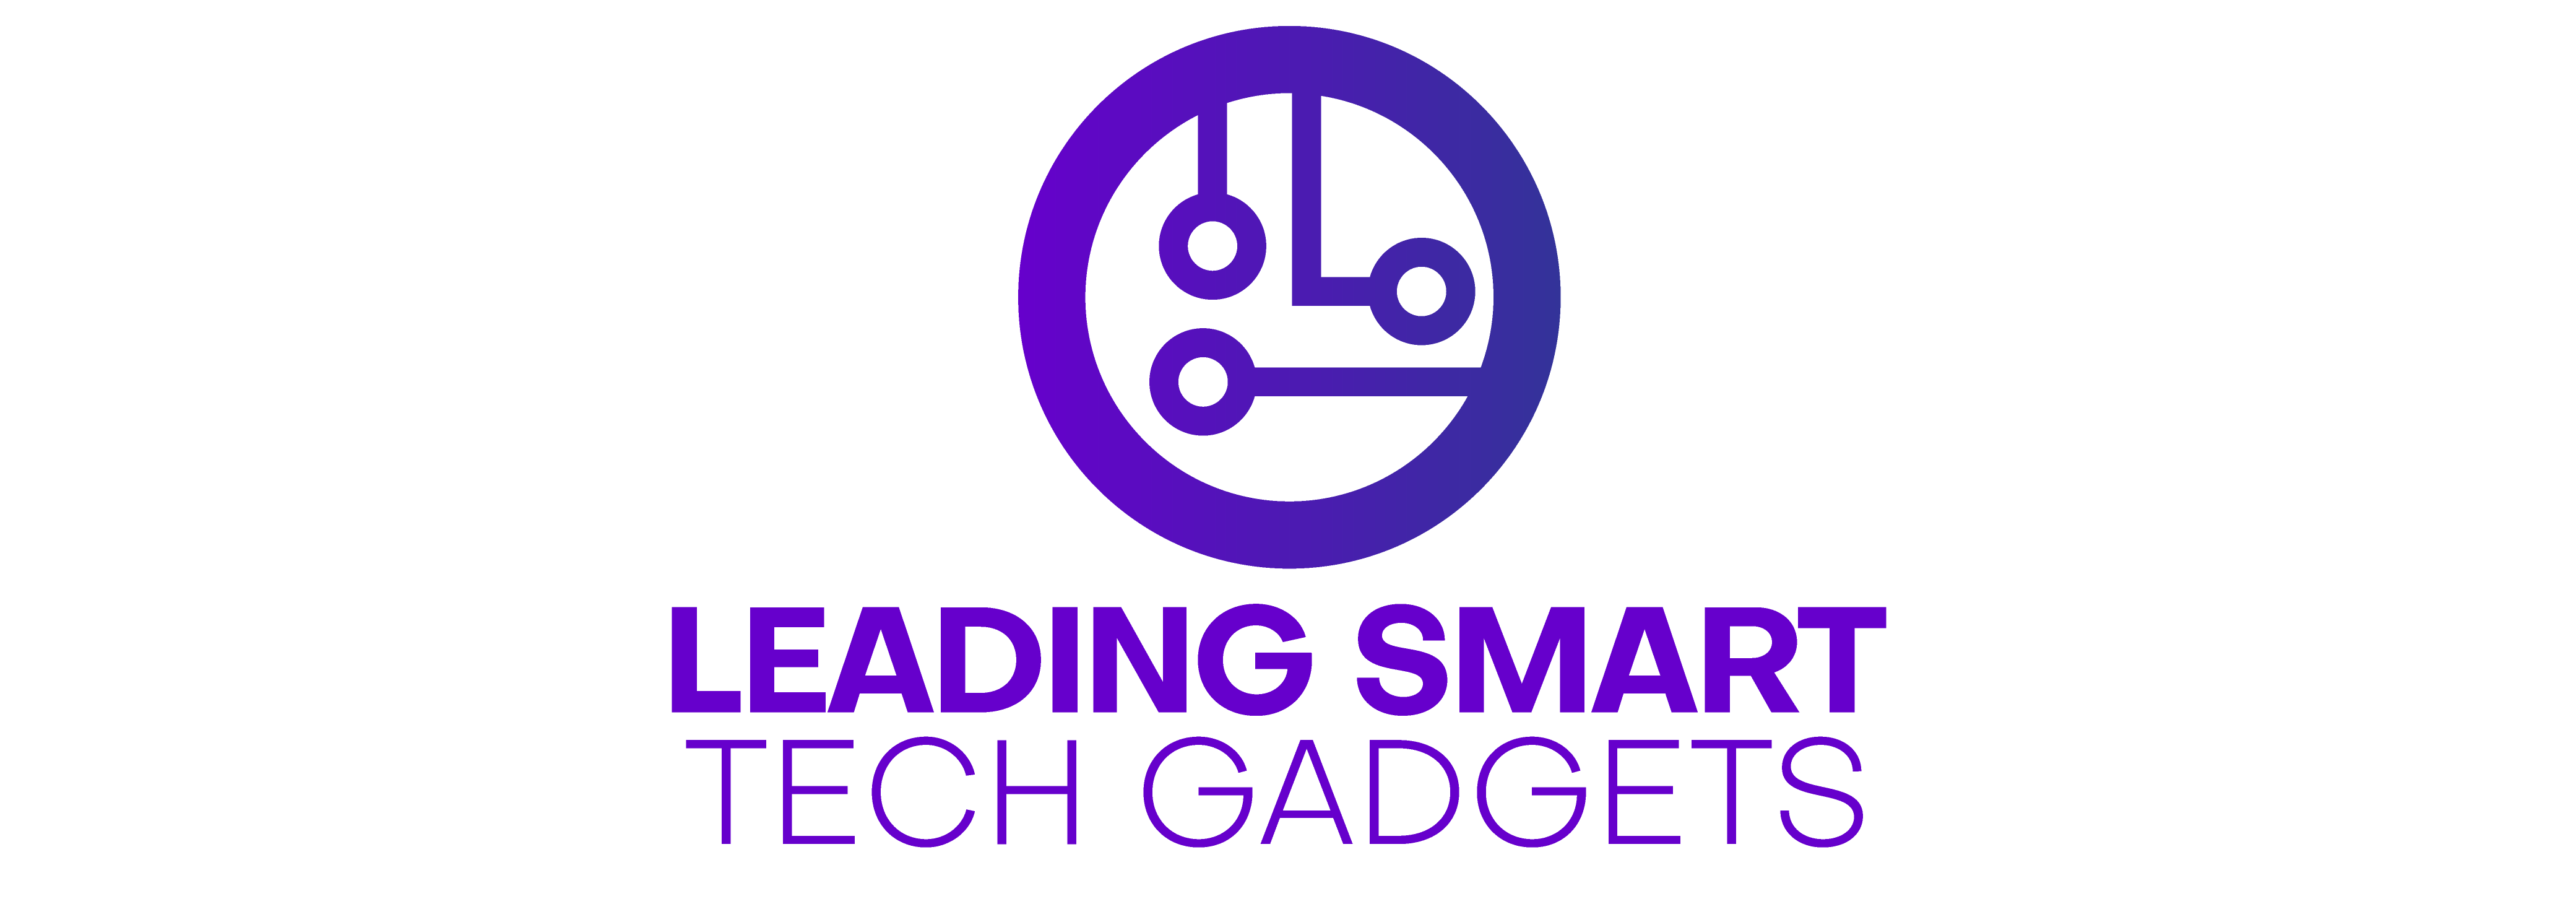 Leading Smart Tech Gadgets